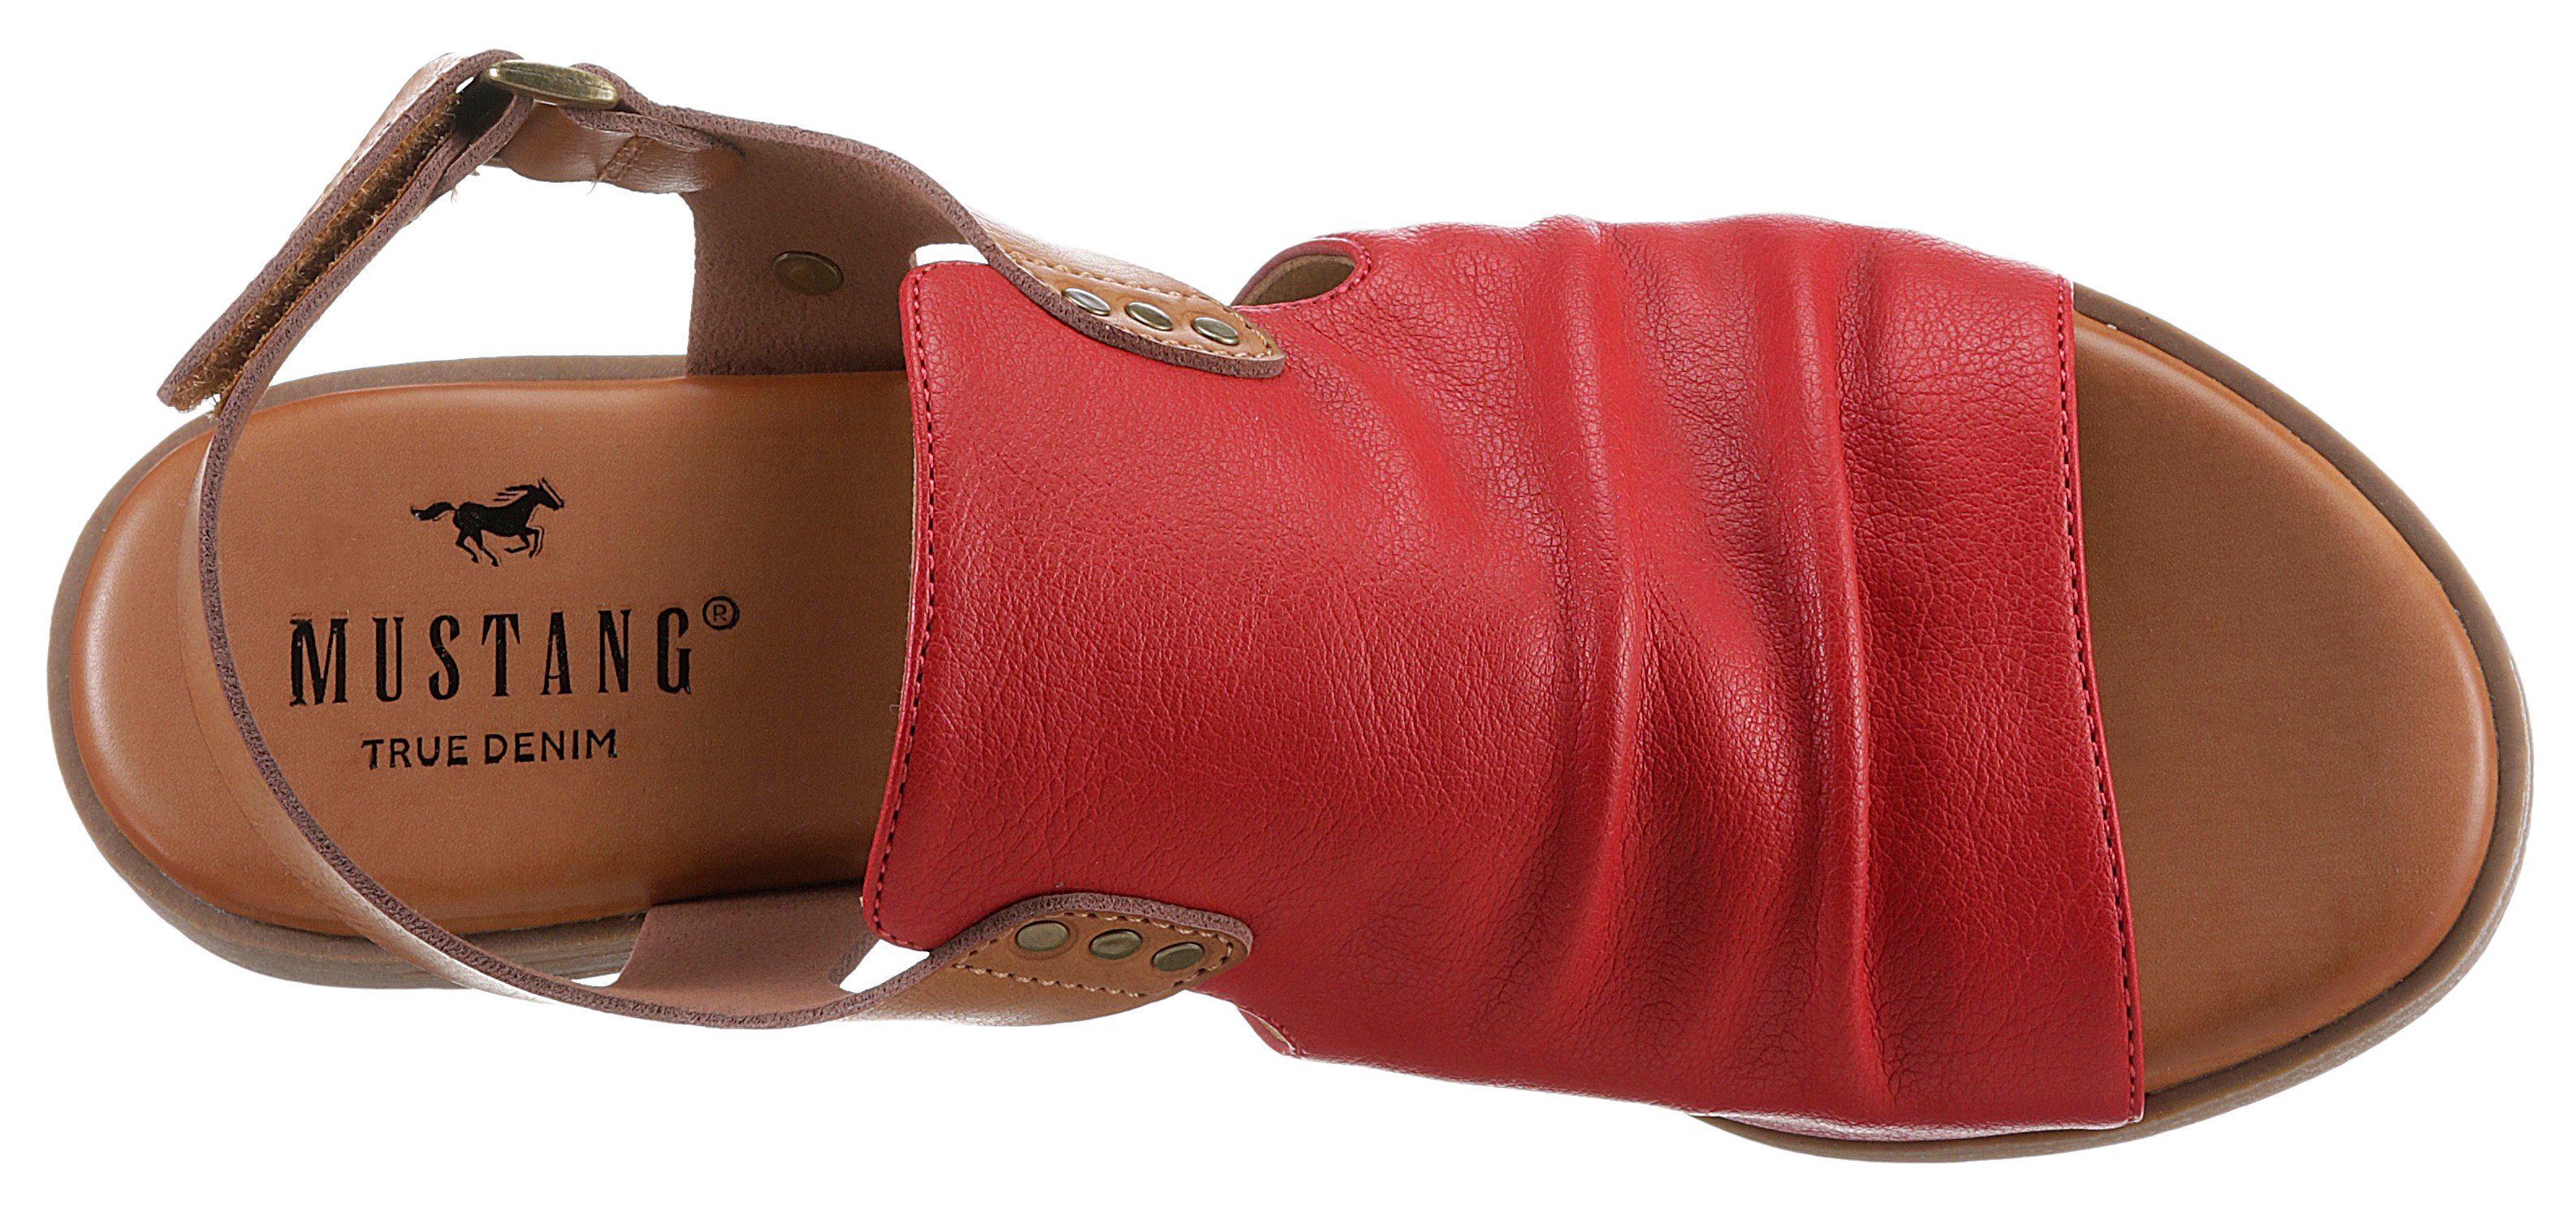 Mustang Shoes Fersenbereich im Klettverschluss Riemchensandale mit rot-braun